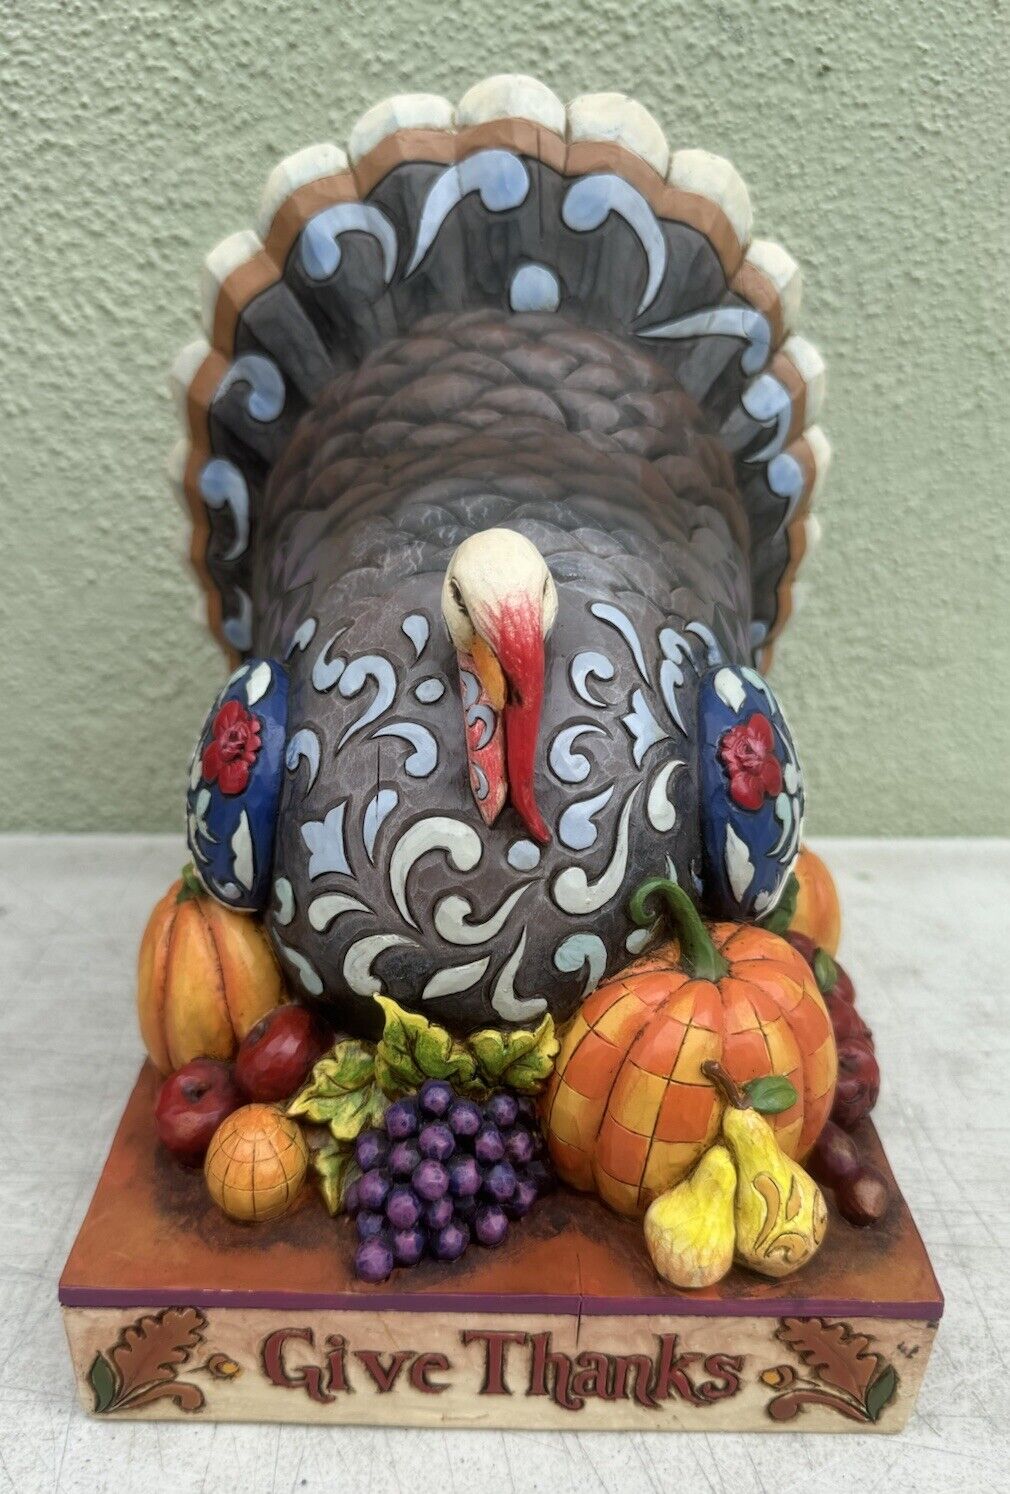 Rare Jim Shore 2008 Turkey Figurine GIVE THANKS thanksgiving 10.5” Tall 4012600